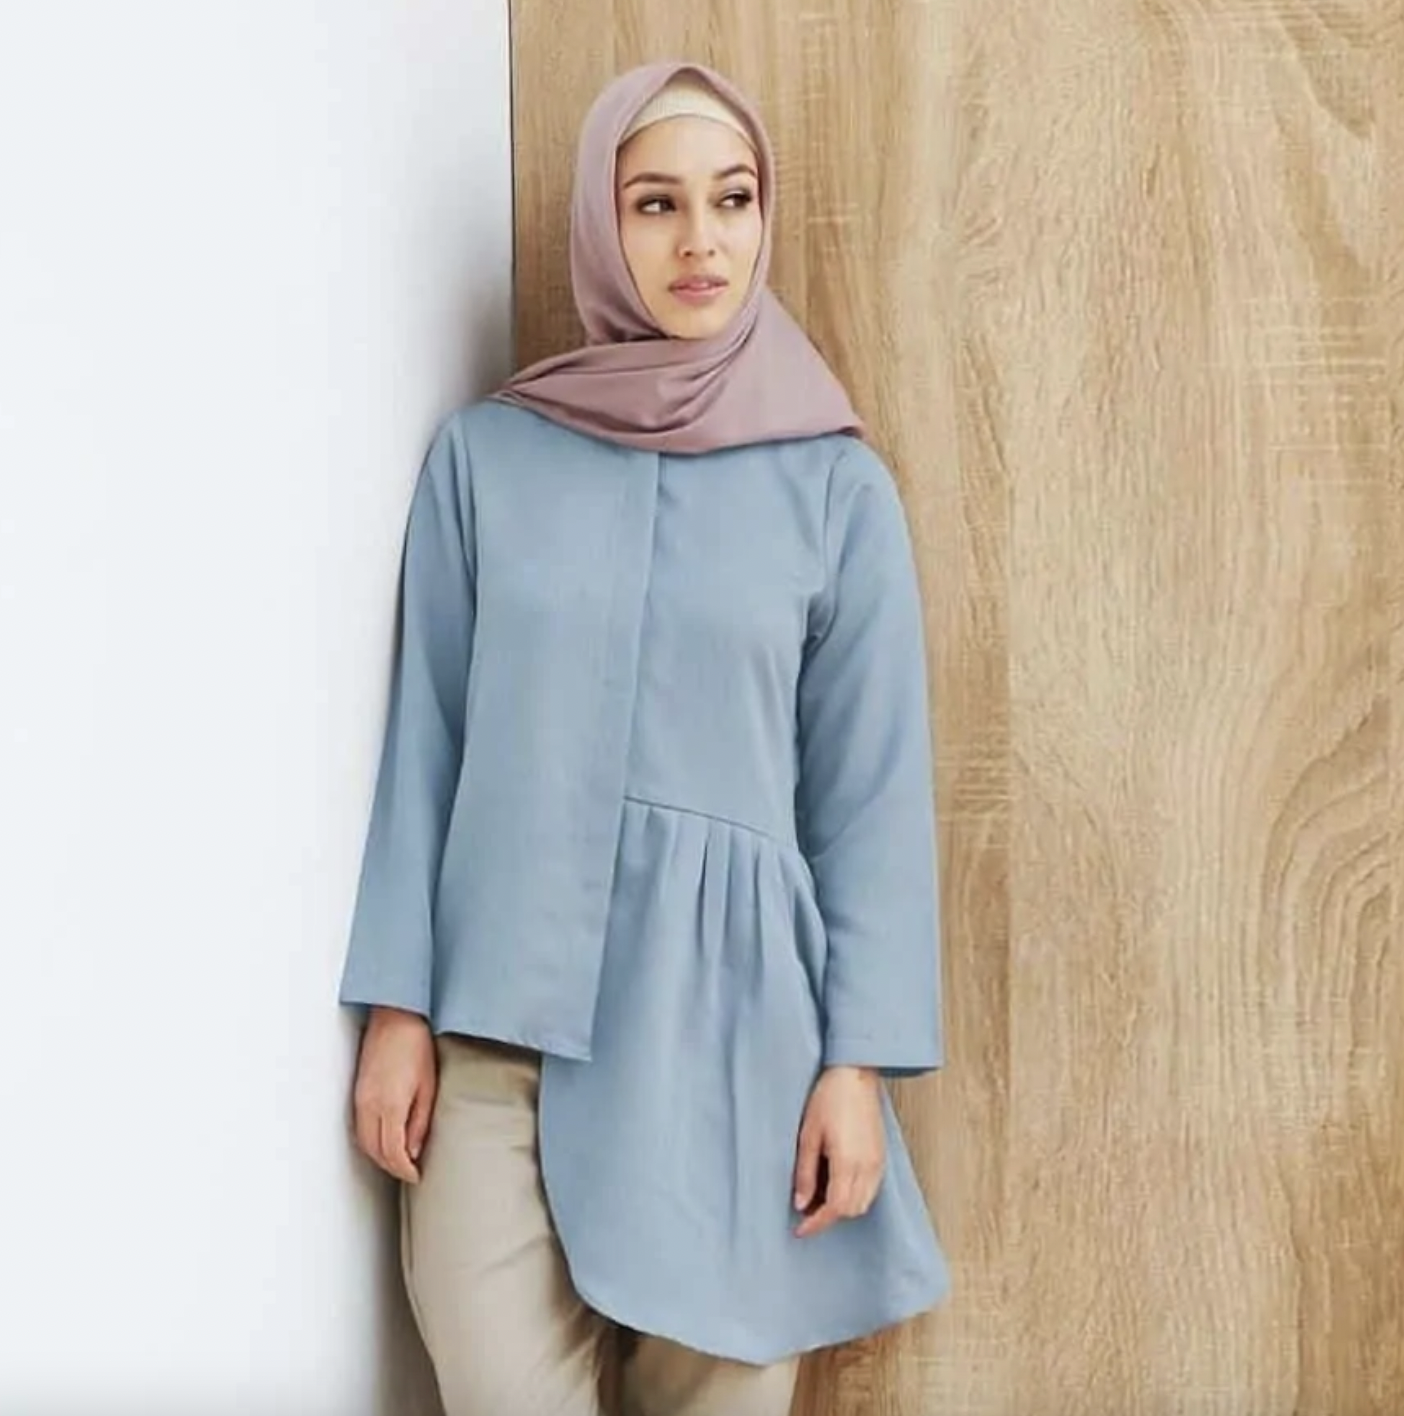 baju biru langit cocok dengan jilbab warna apa